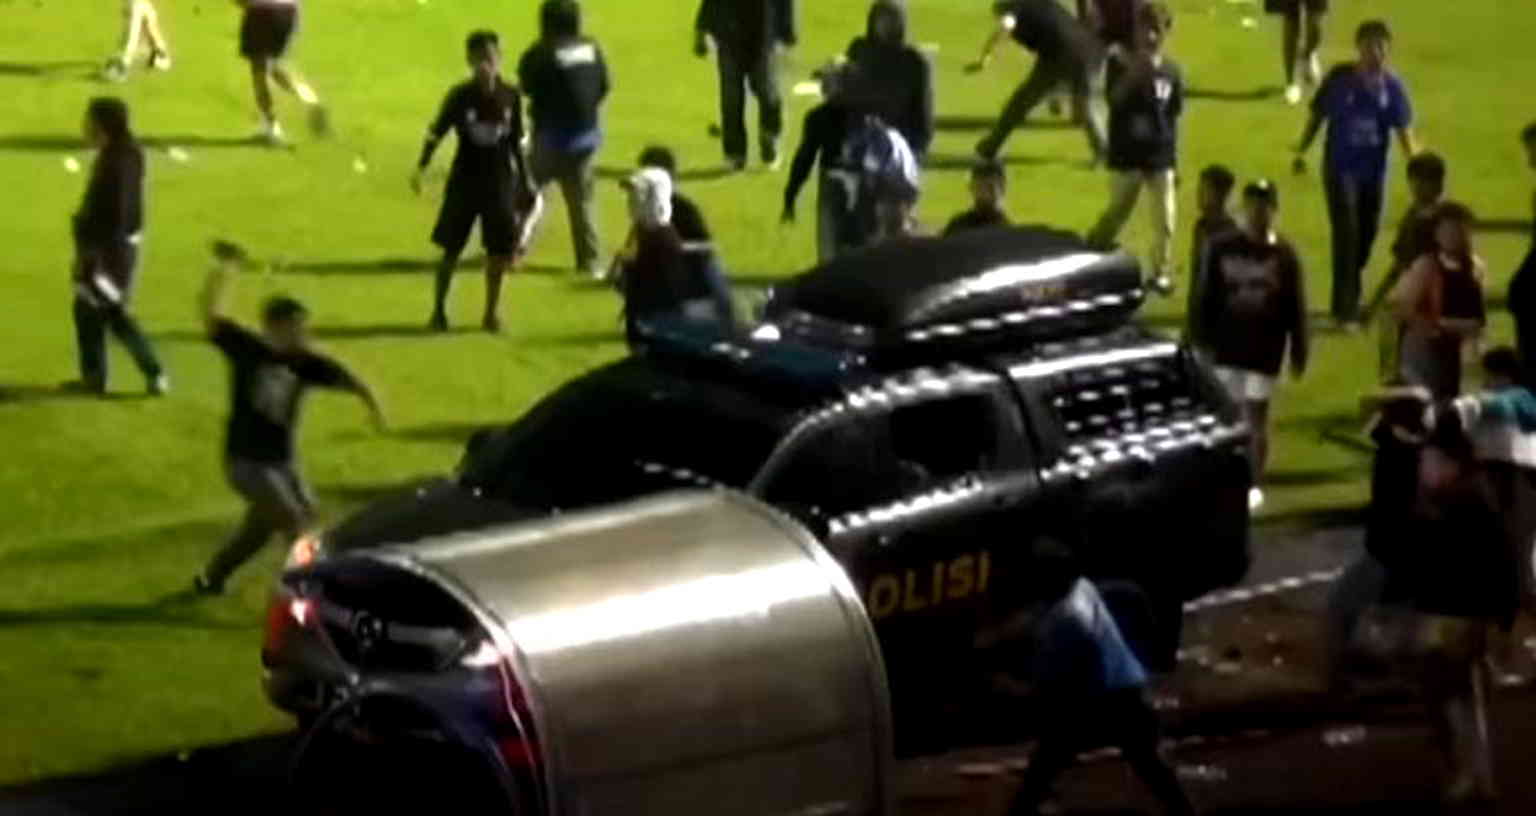 Police under investigation after soccer match stampede kills at least 125 in Indonesia